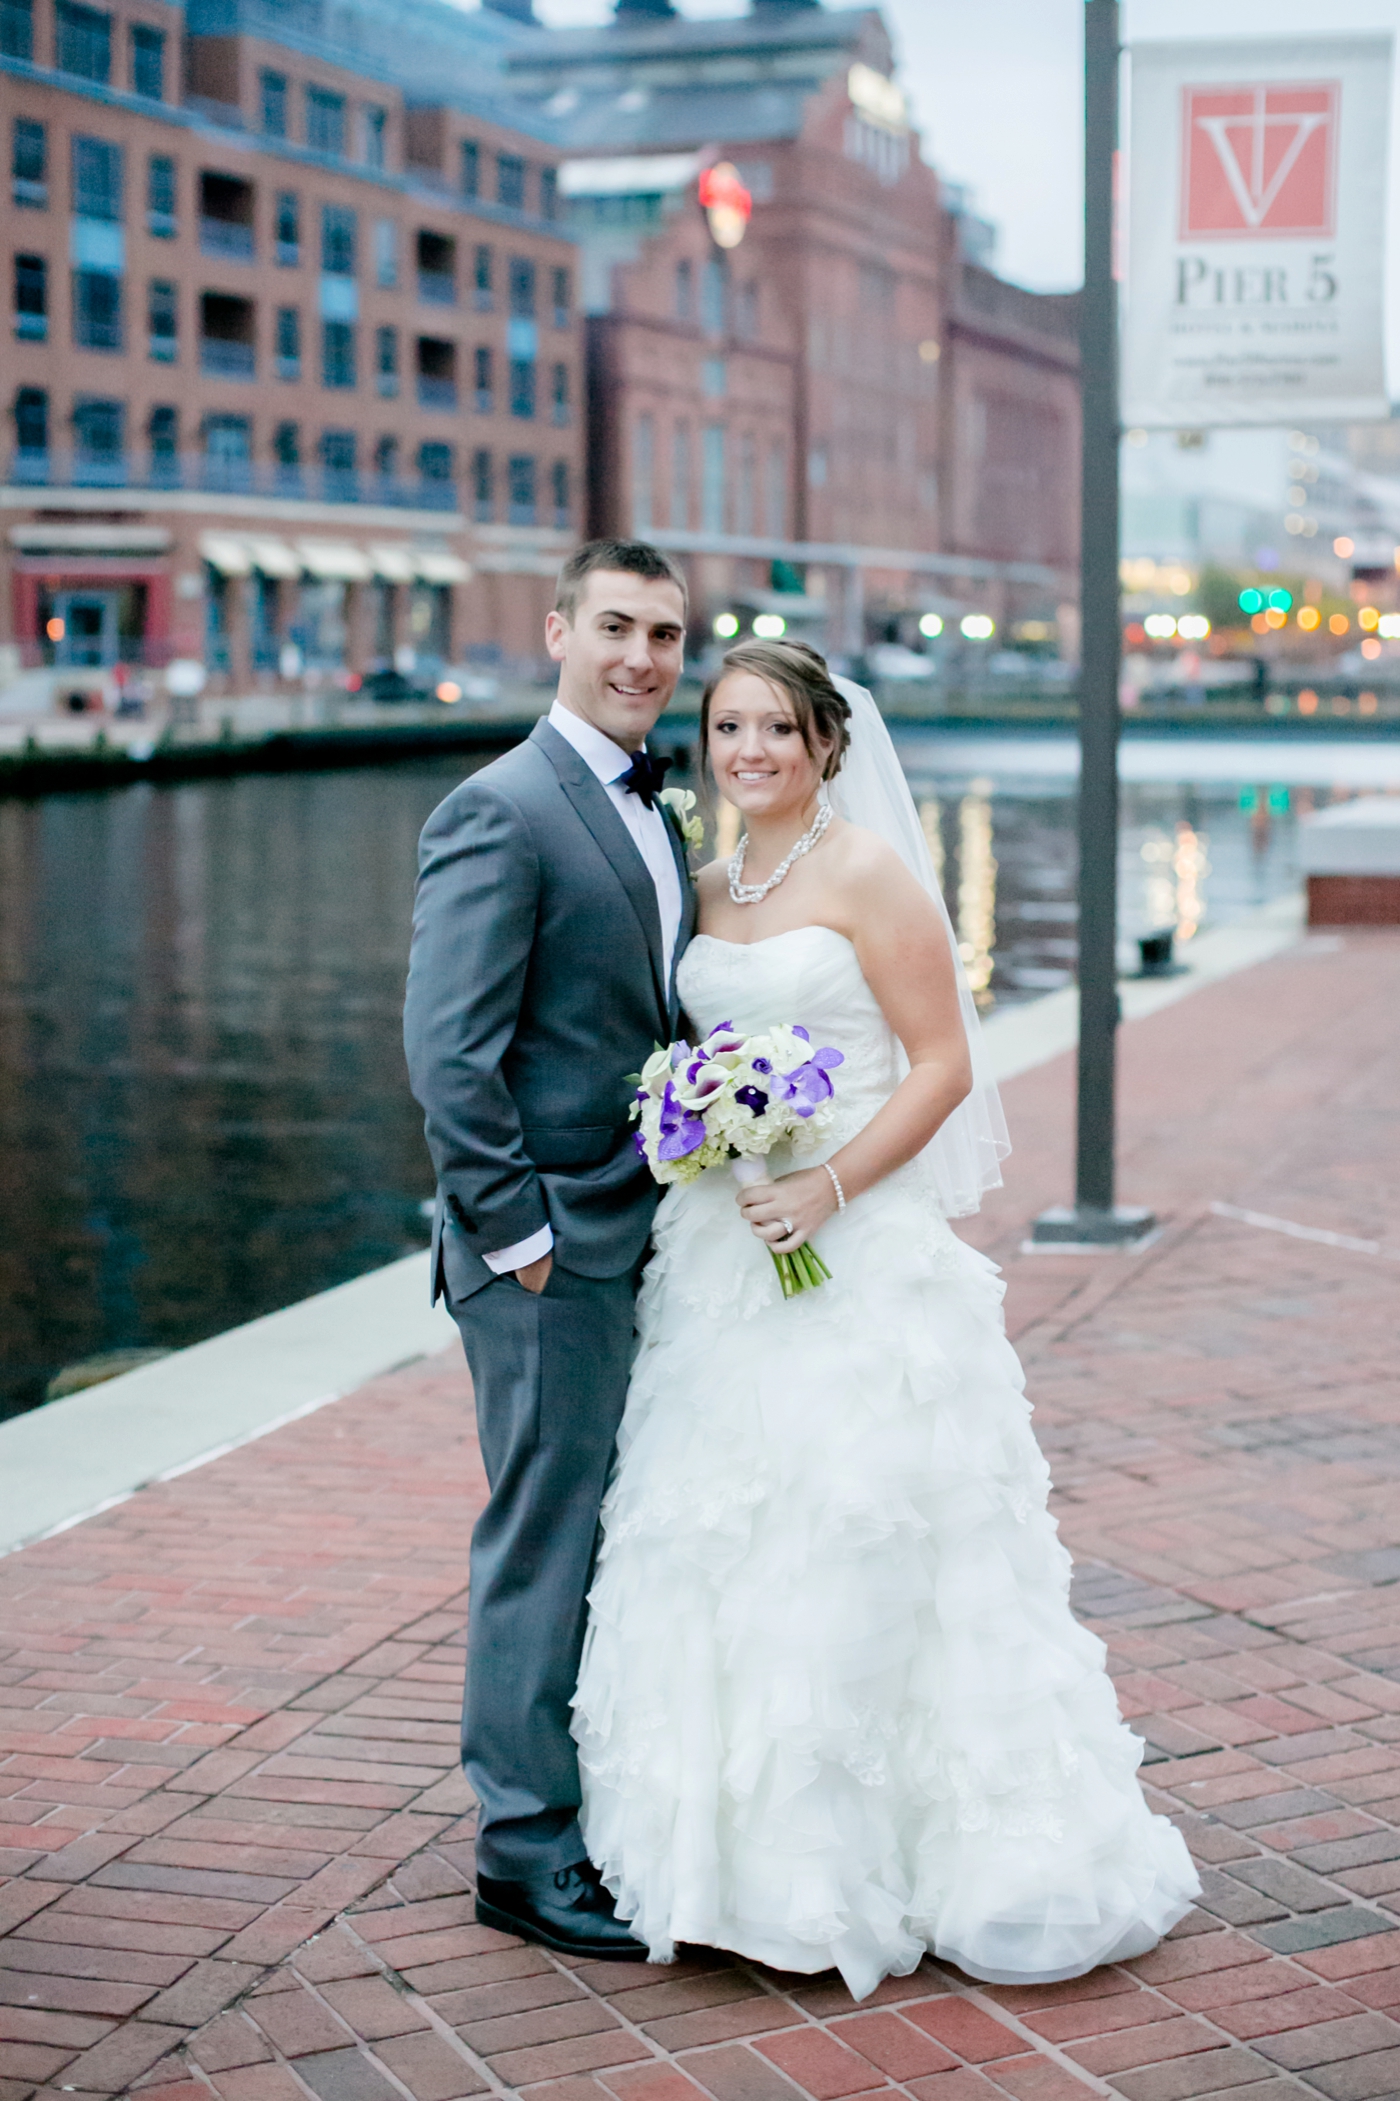 48A-Pier-5-Wedding-Baltimore-Maryland-1161